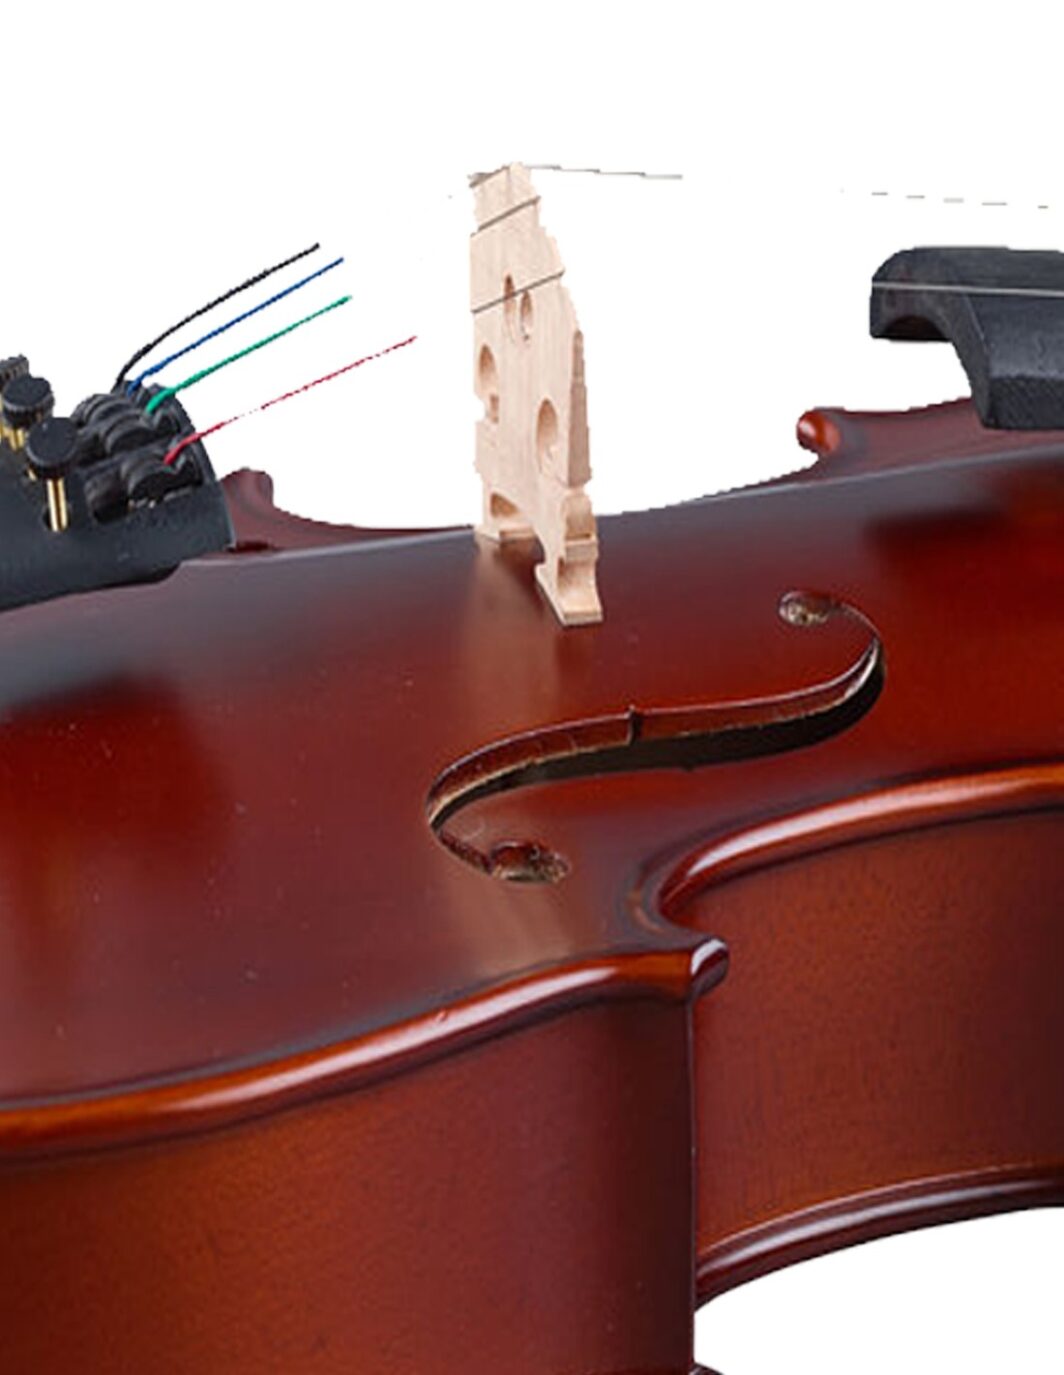 Gewa Pure Violino set HW 4/4